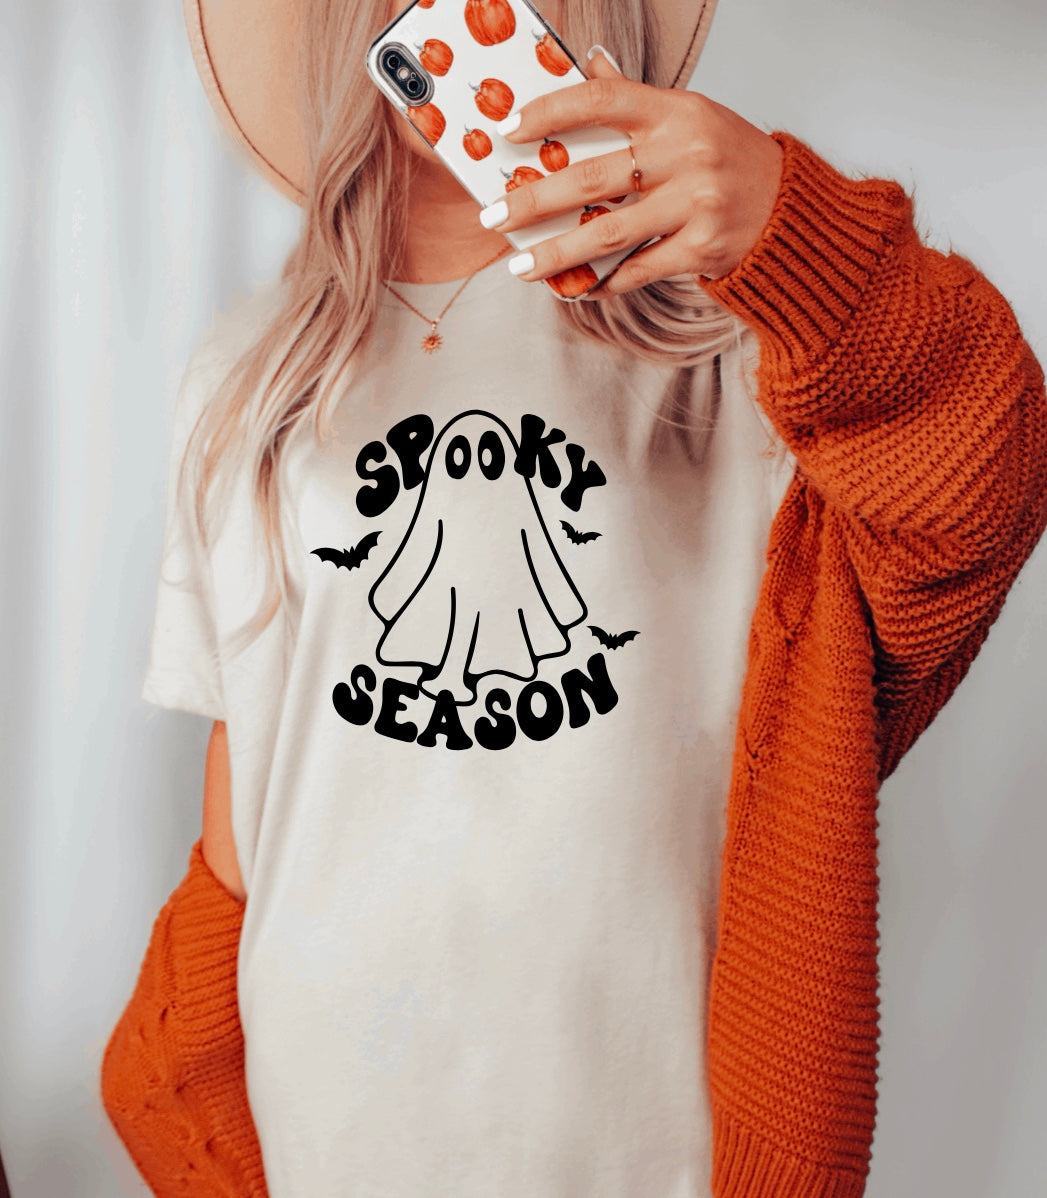 Spooky season t-shirt 